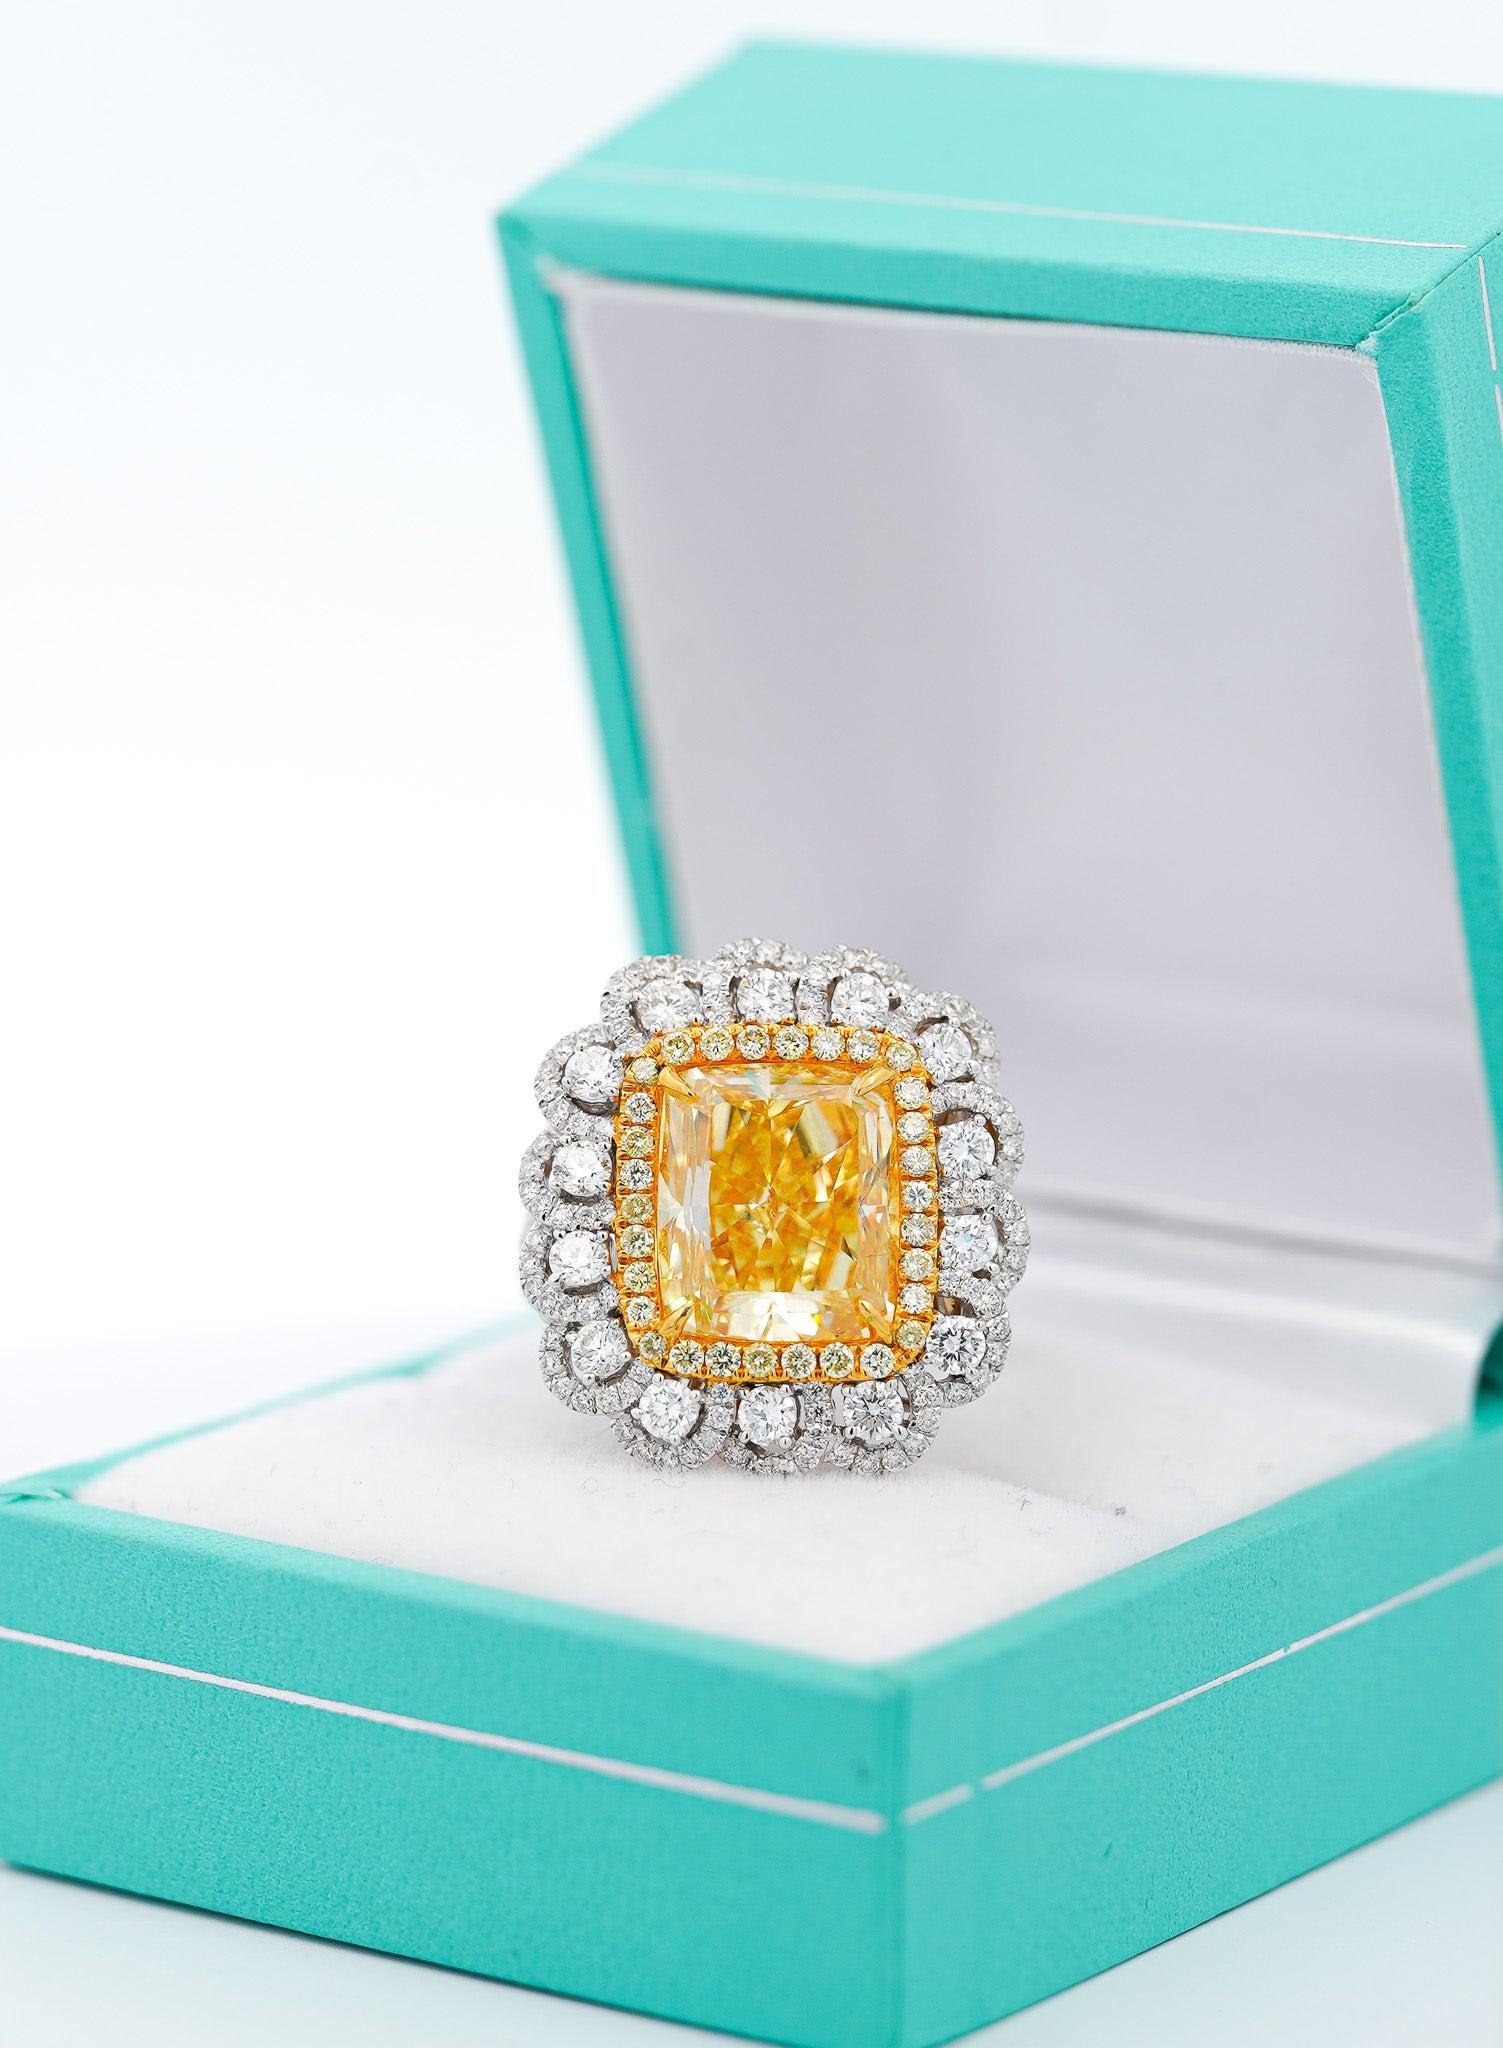 7 Carat Fancy Intense Yellow Radiant Cut Diamond and Diamond Halo Ring | GIA Certified